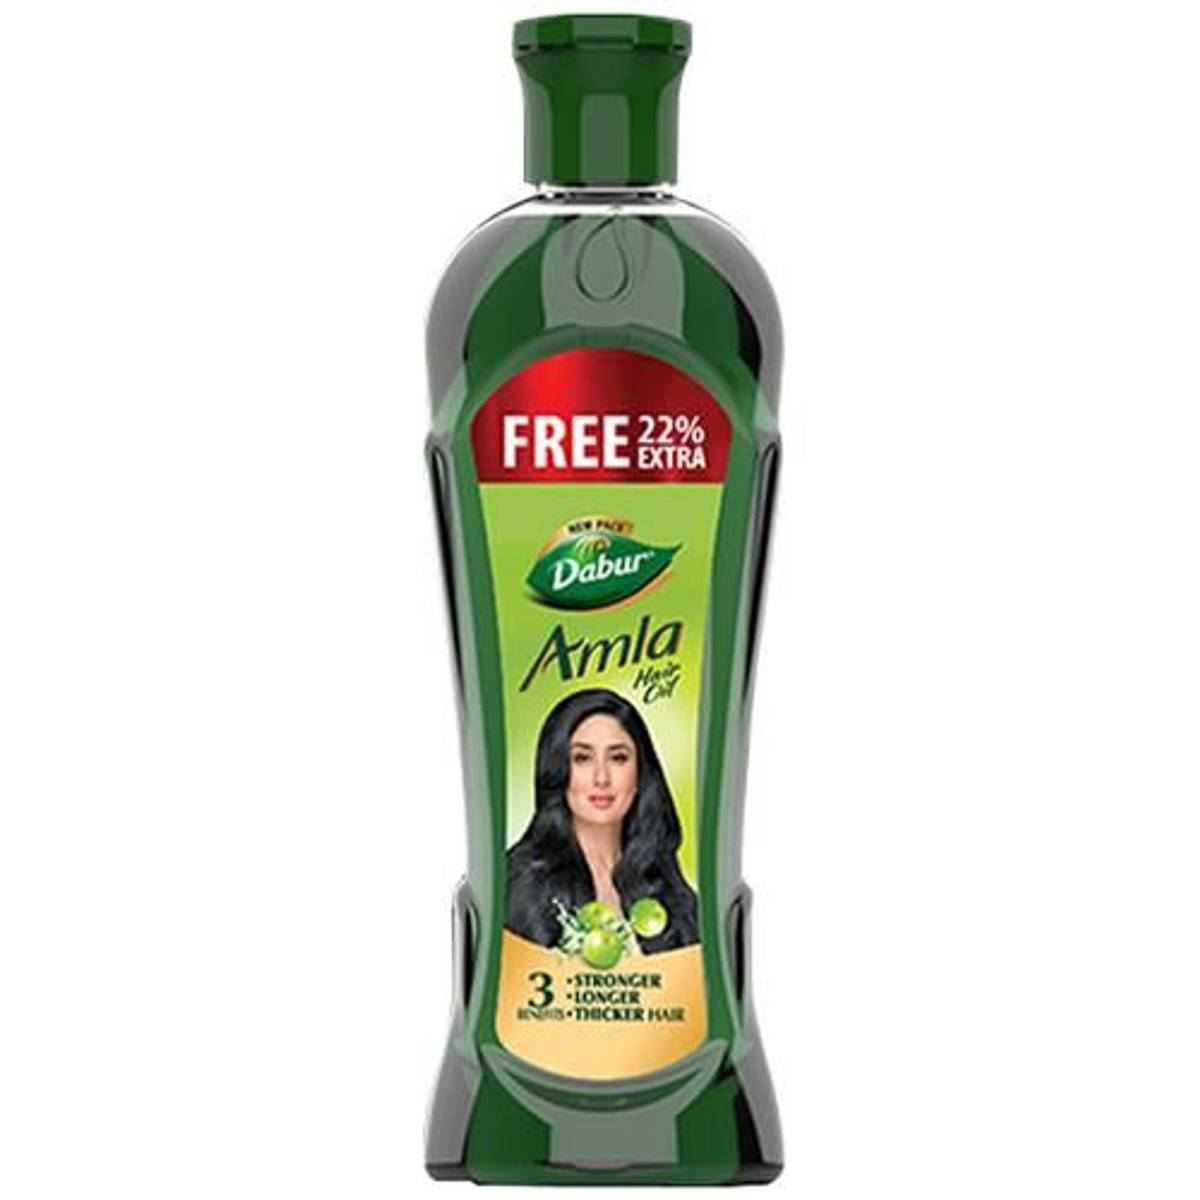 Dabur Amla Hair Oil Free 22% Extra 110ml